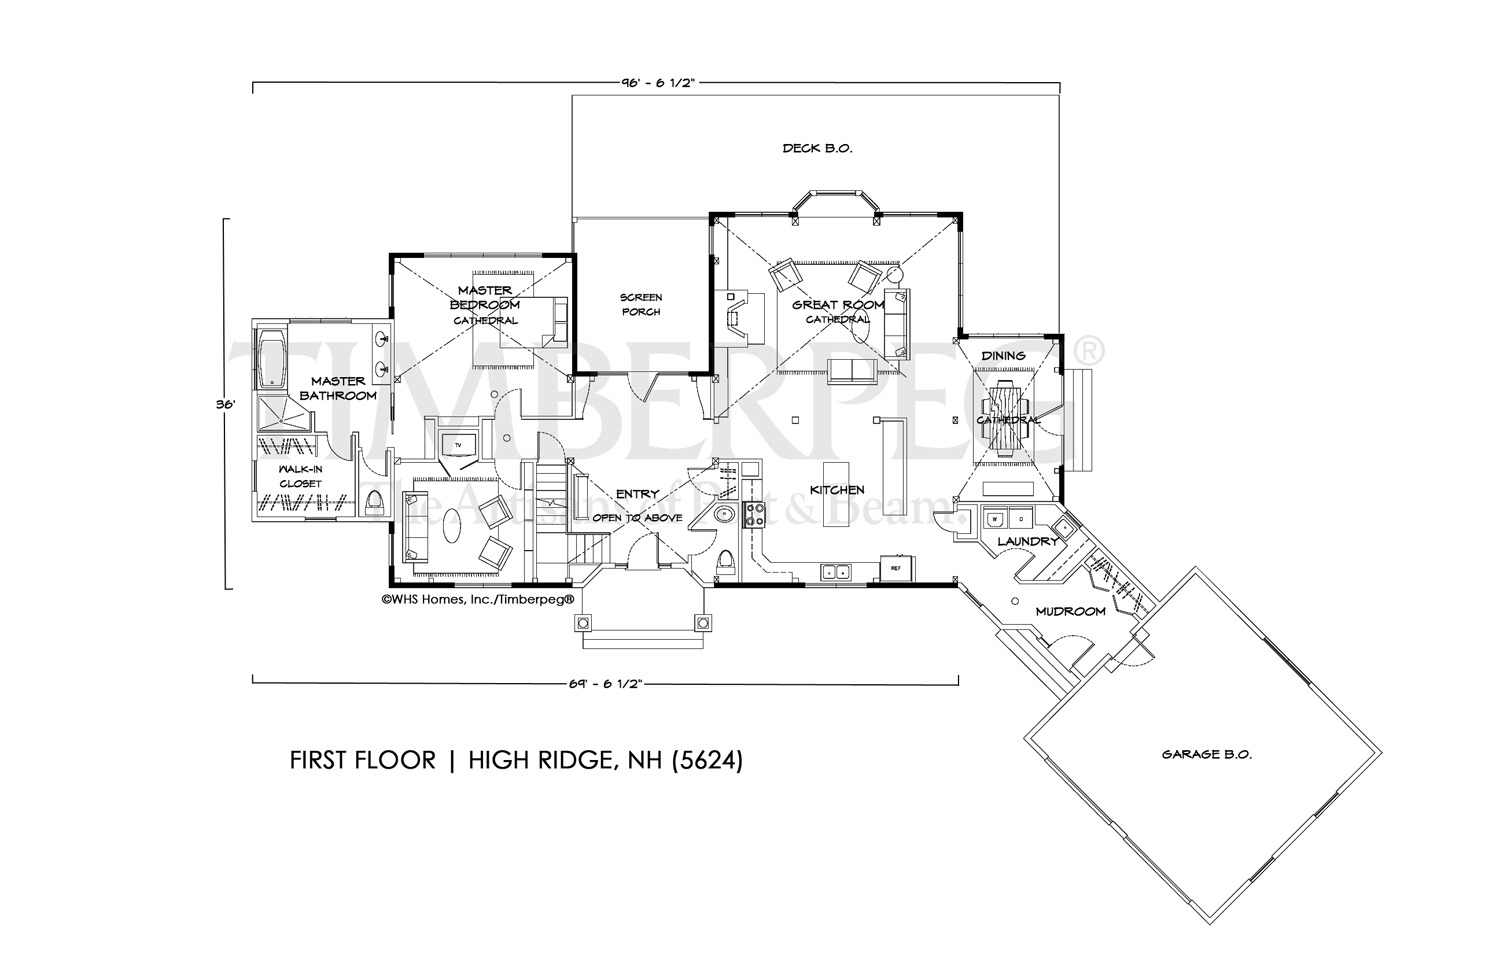 High Ridge, NH First Floor Plan (5624)